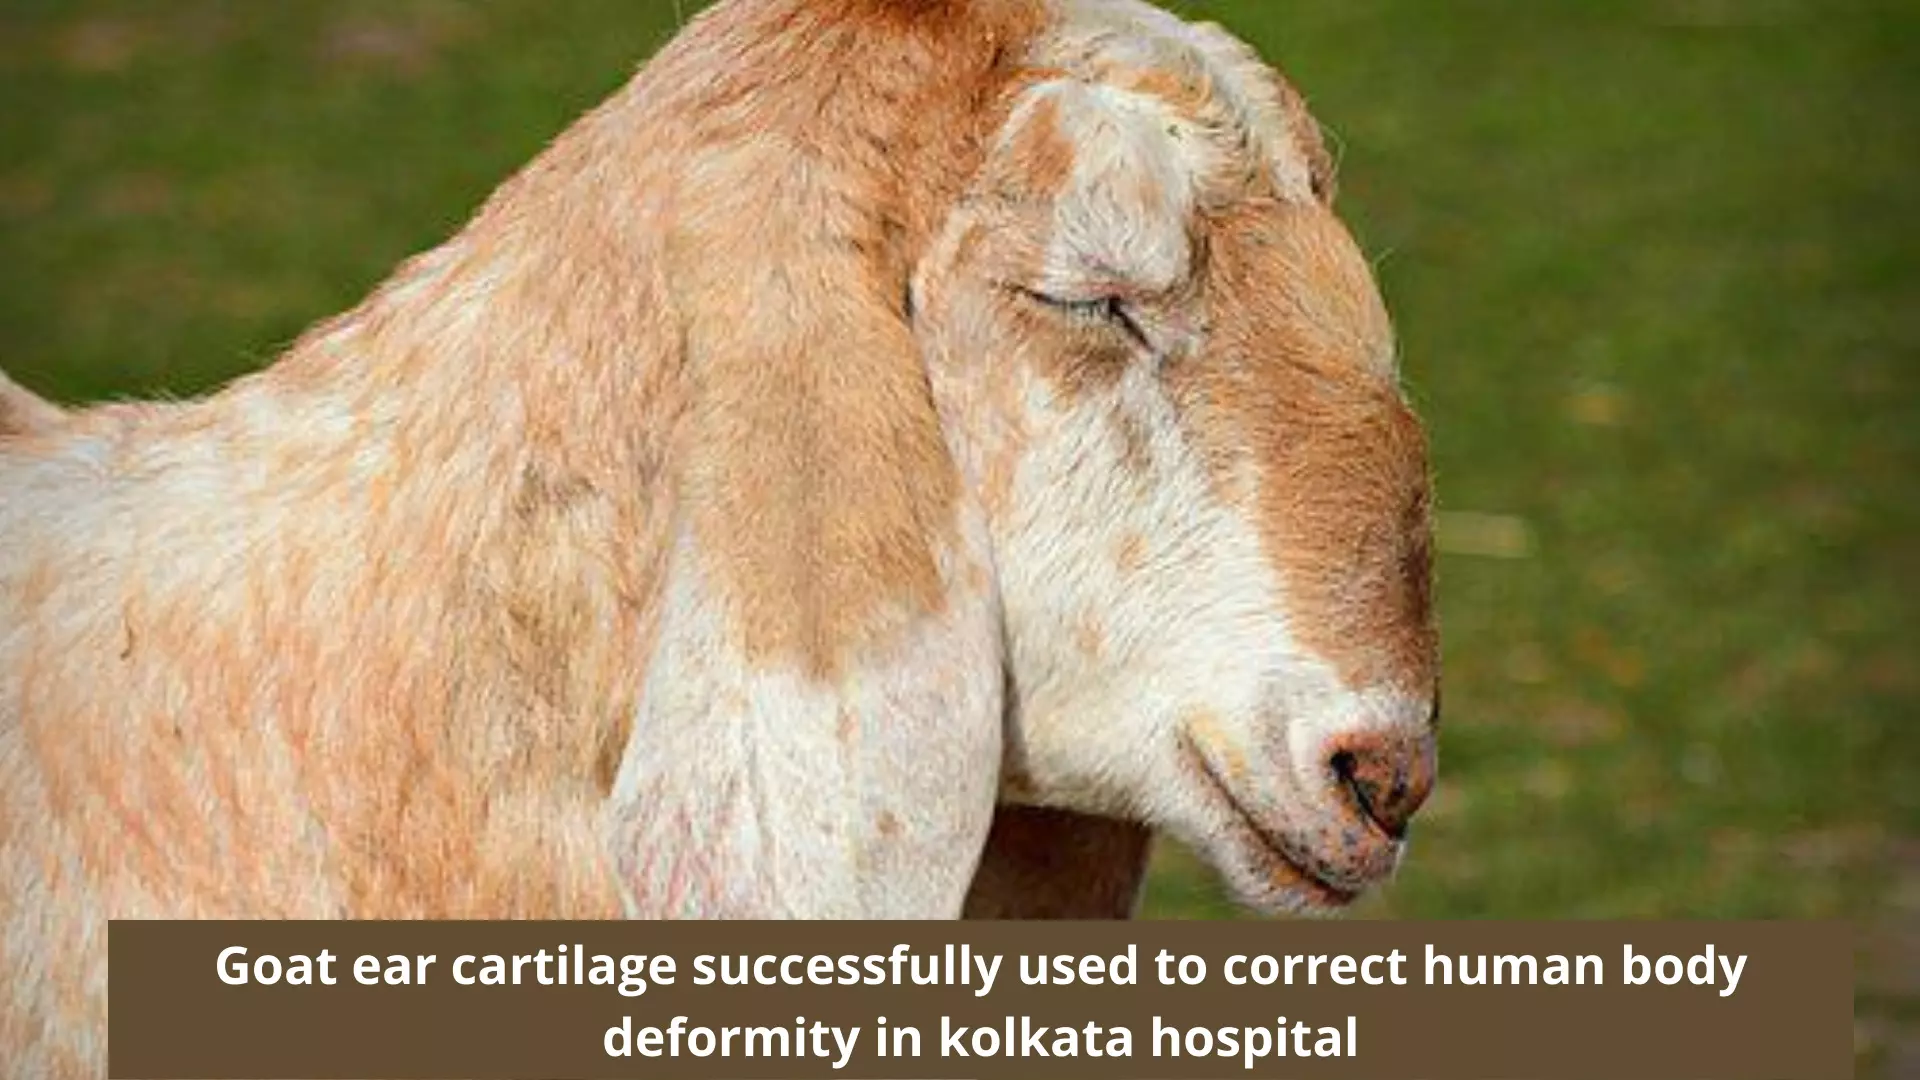 Goat ear cartilage successfully used to correct human body deformity in Kolkata hospital